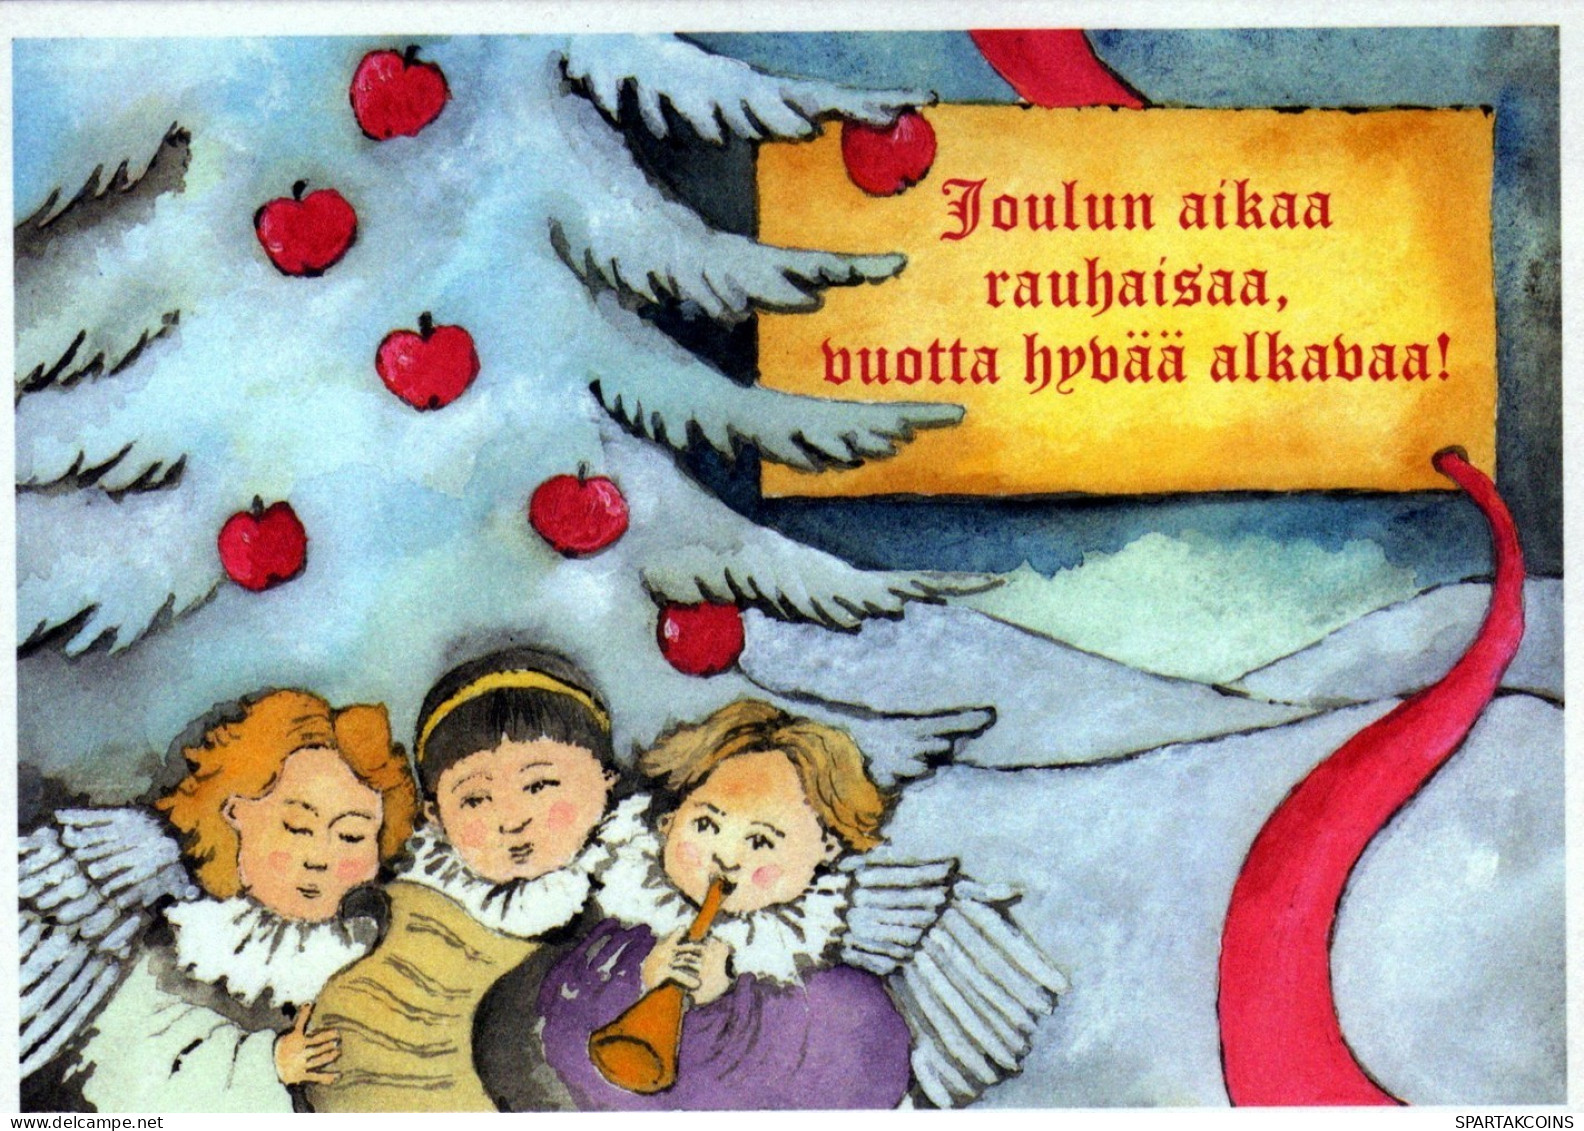 ANGELO Buon Anno Natale Vintage Cartolina CPSM #PAH165.IT - Engel